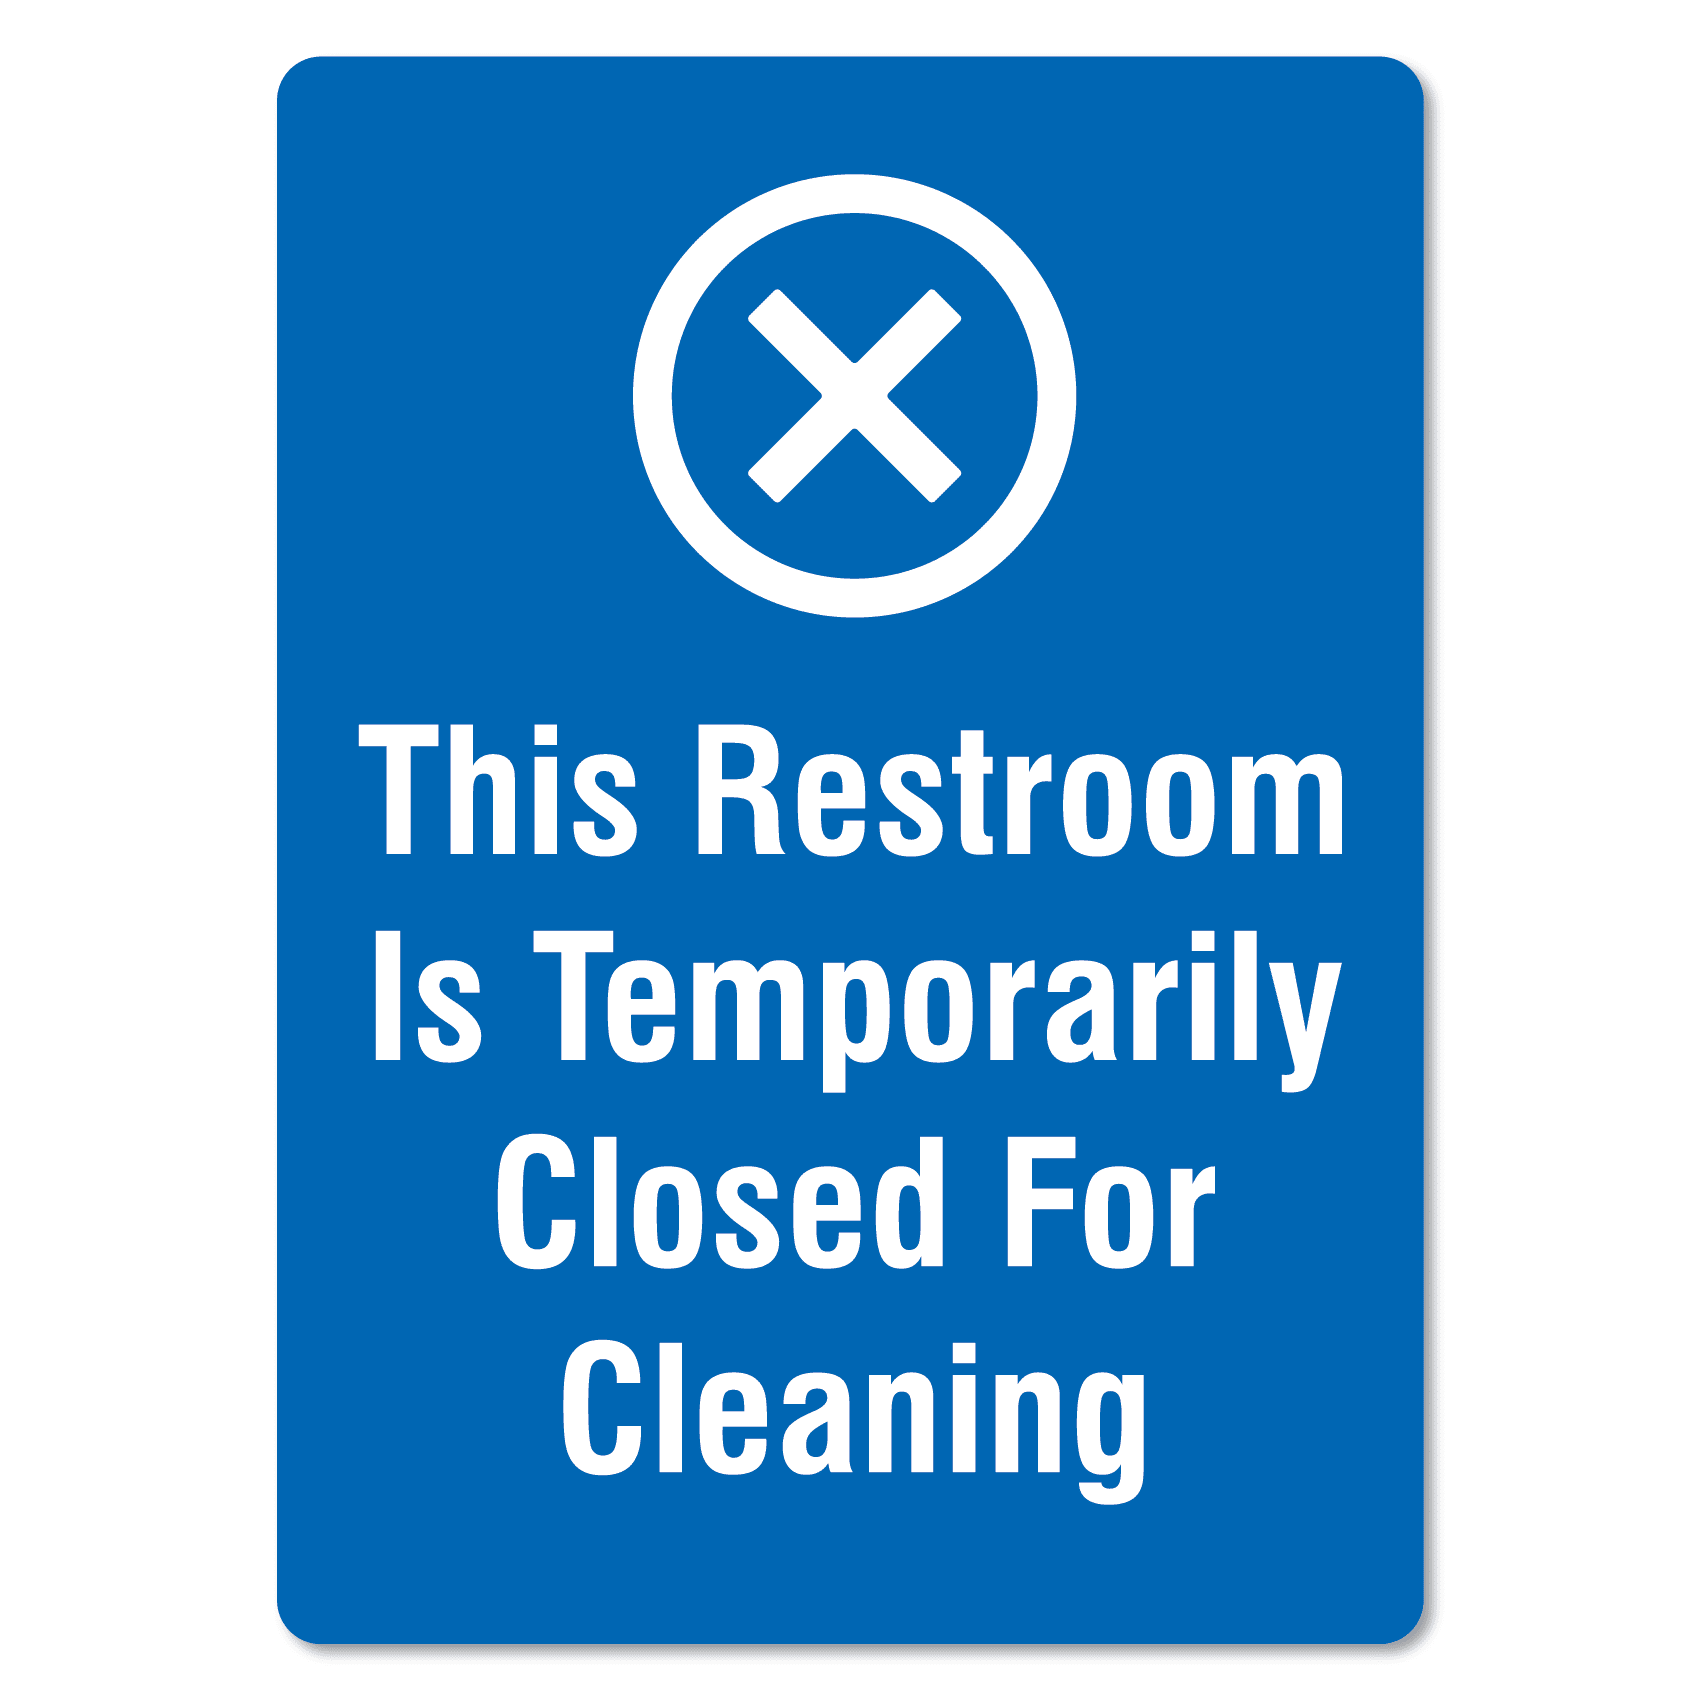 Closed Bathroom